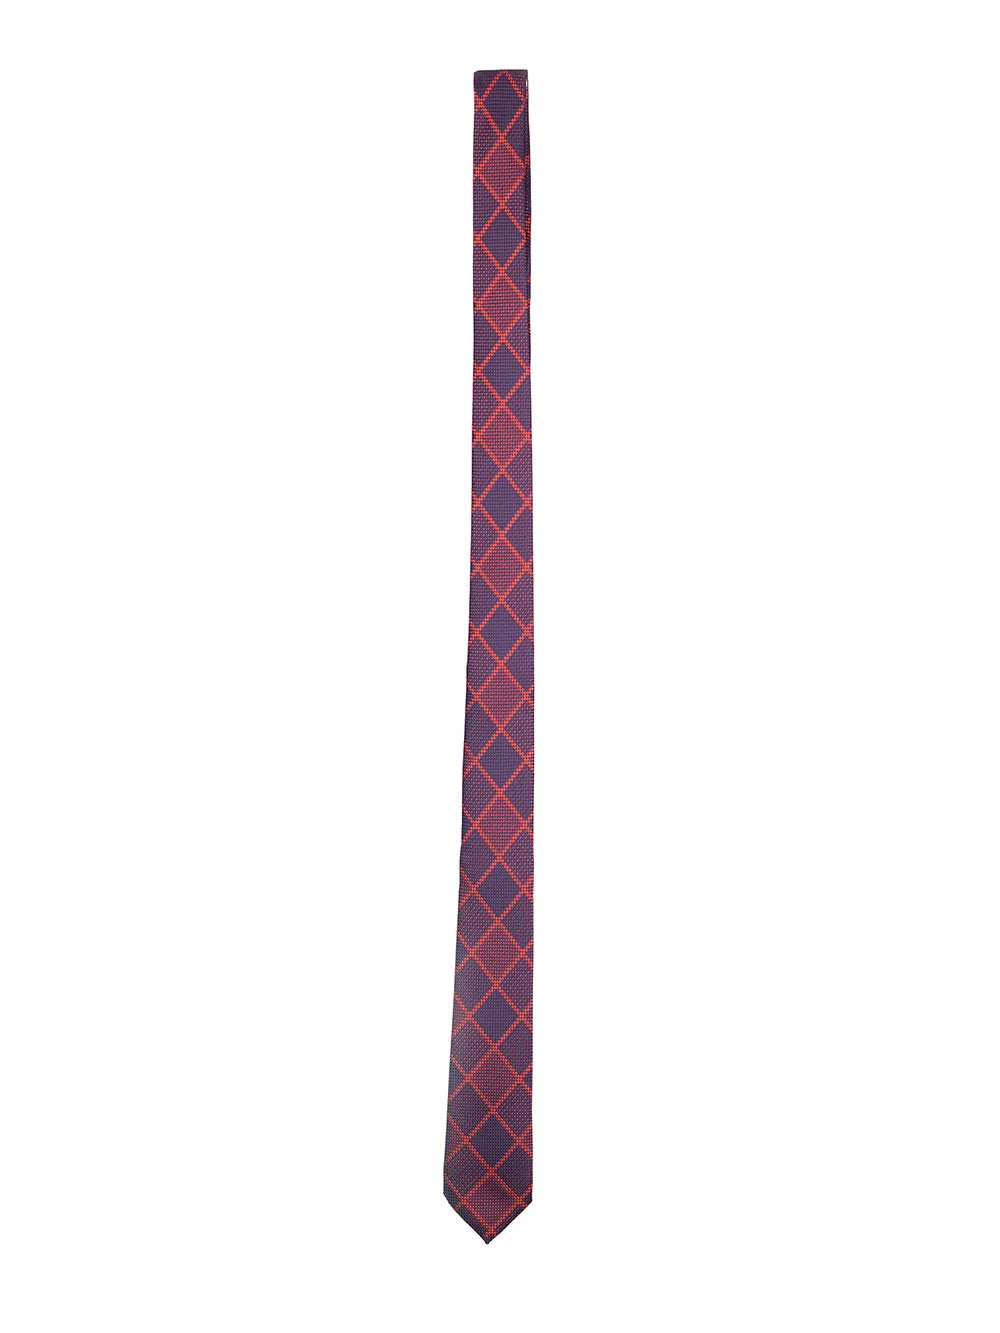 Cravatta Viola a Quadri